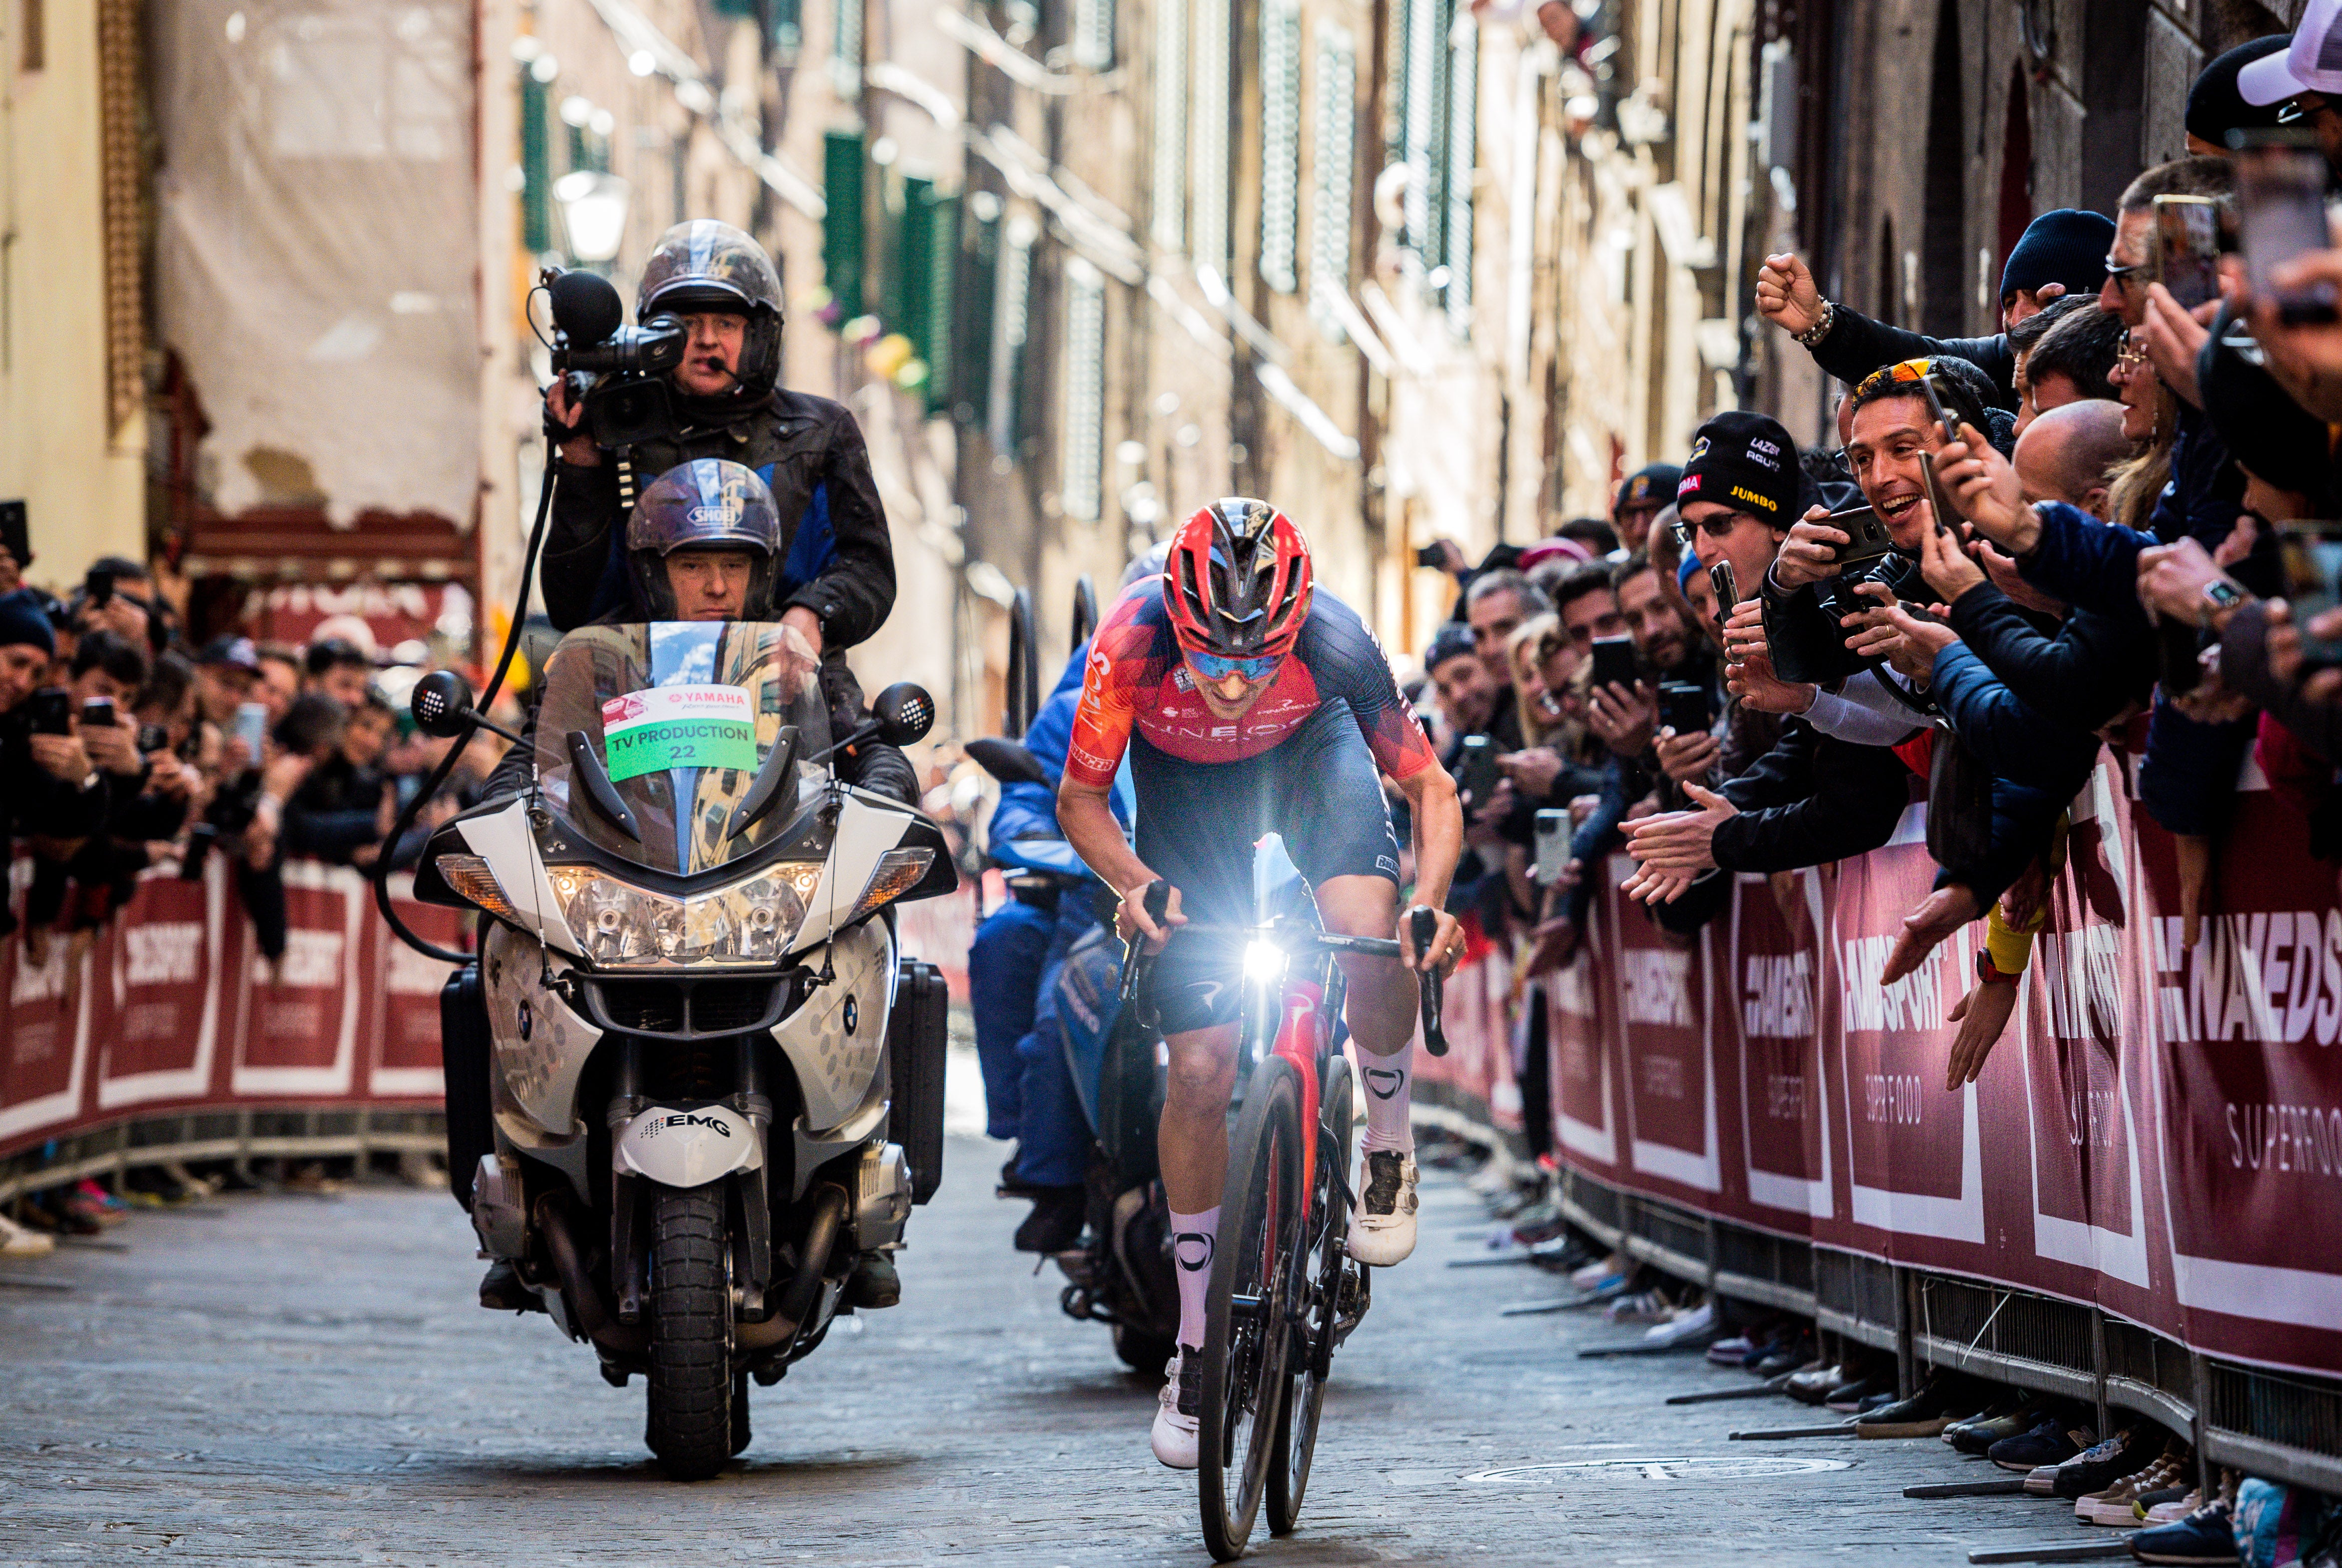 Thomas Pidcock riding up the final climb into Siena 